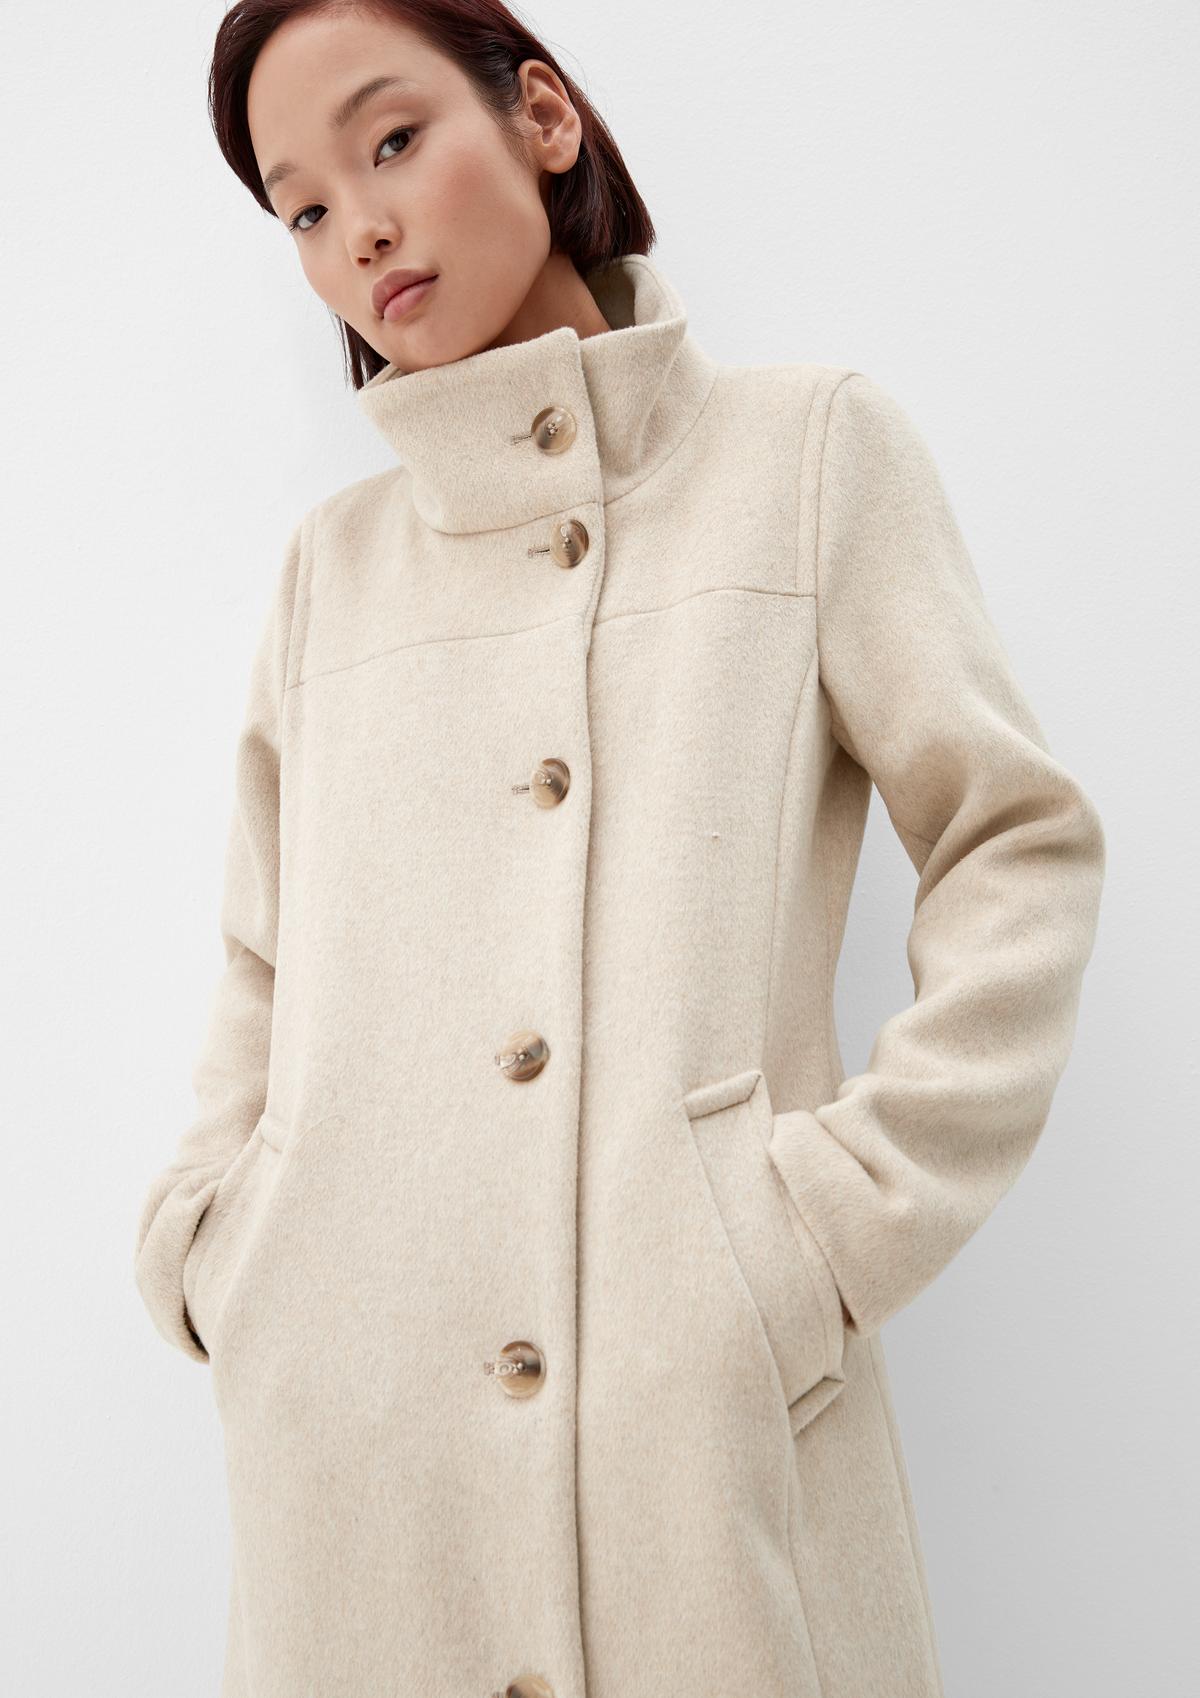 Wool blend coat in a classic look